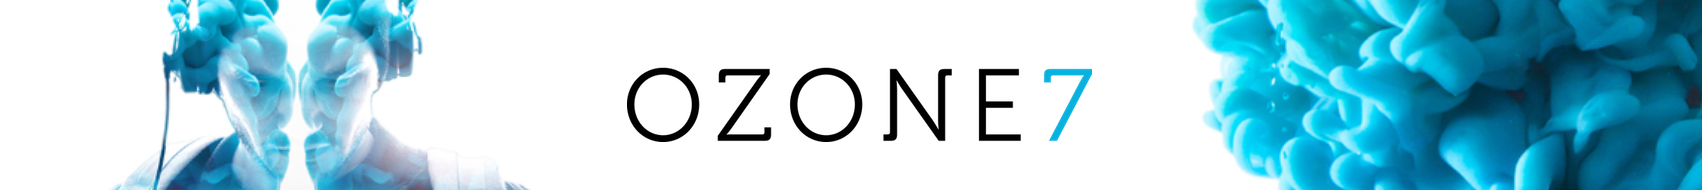 Ozone 7